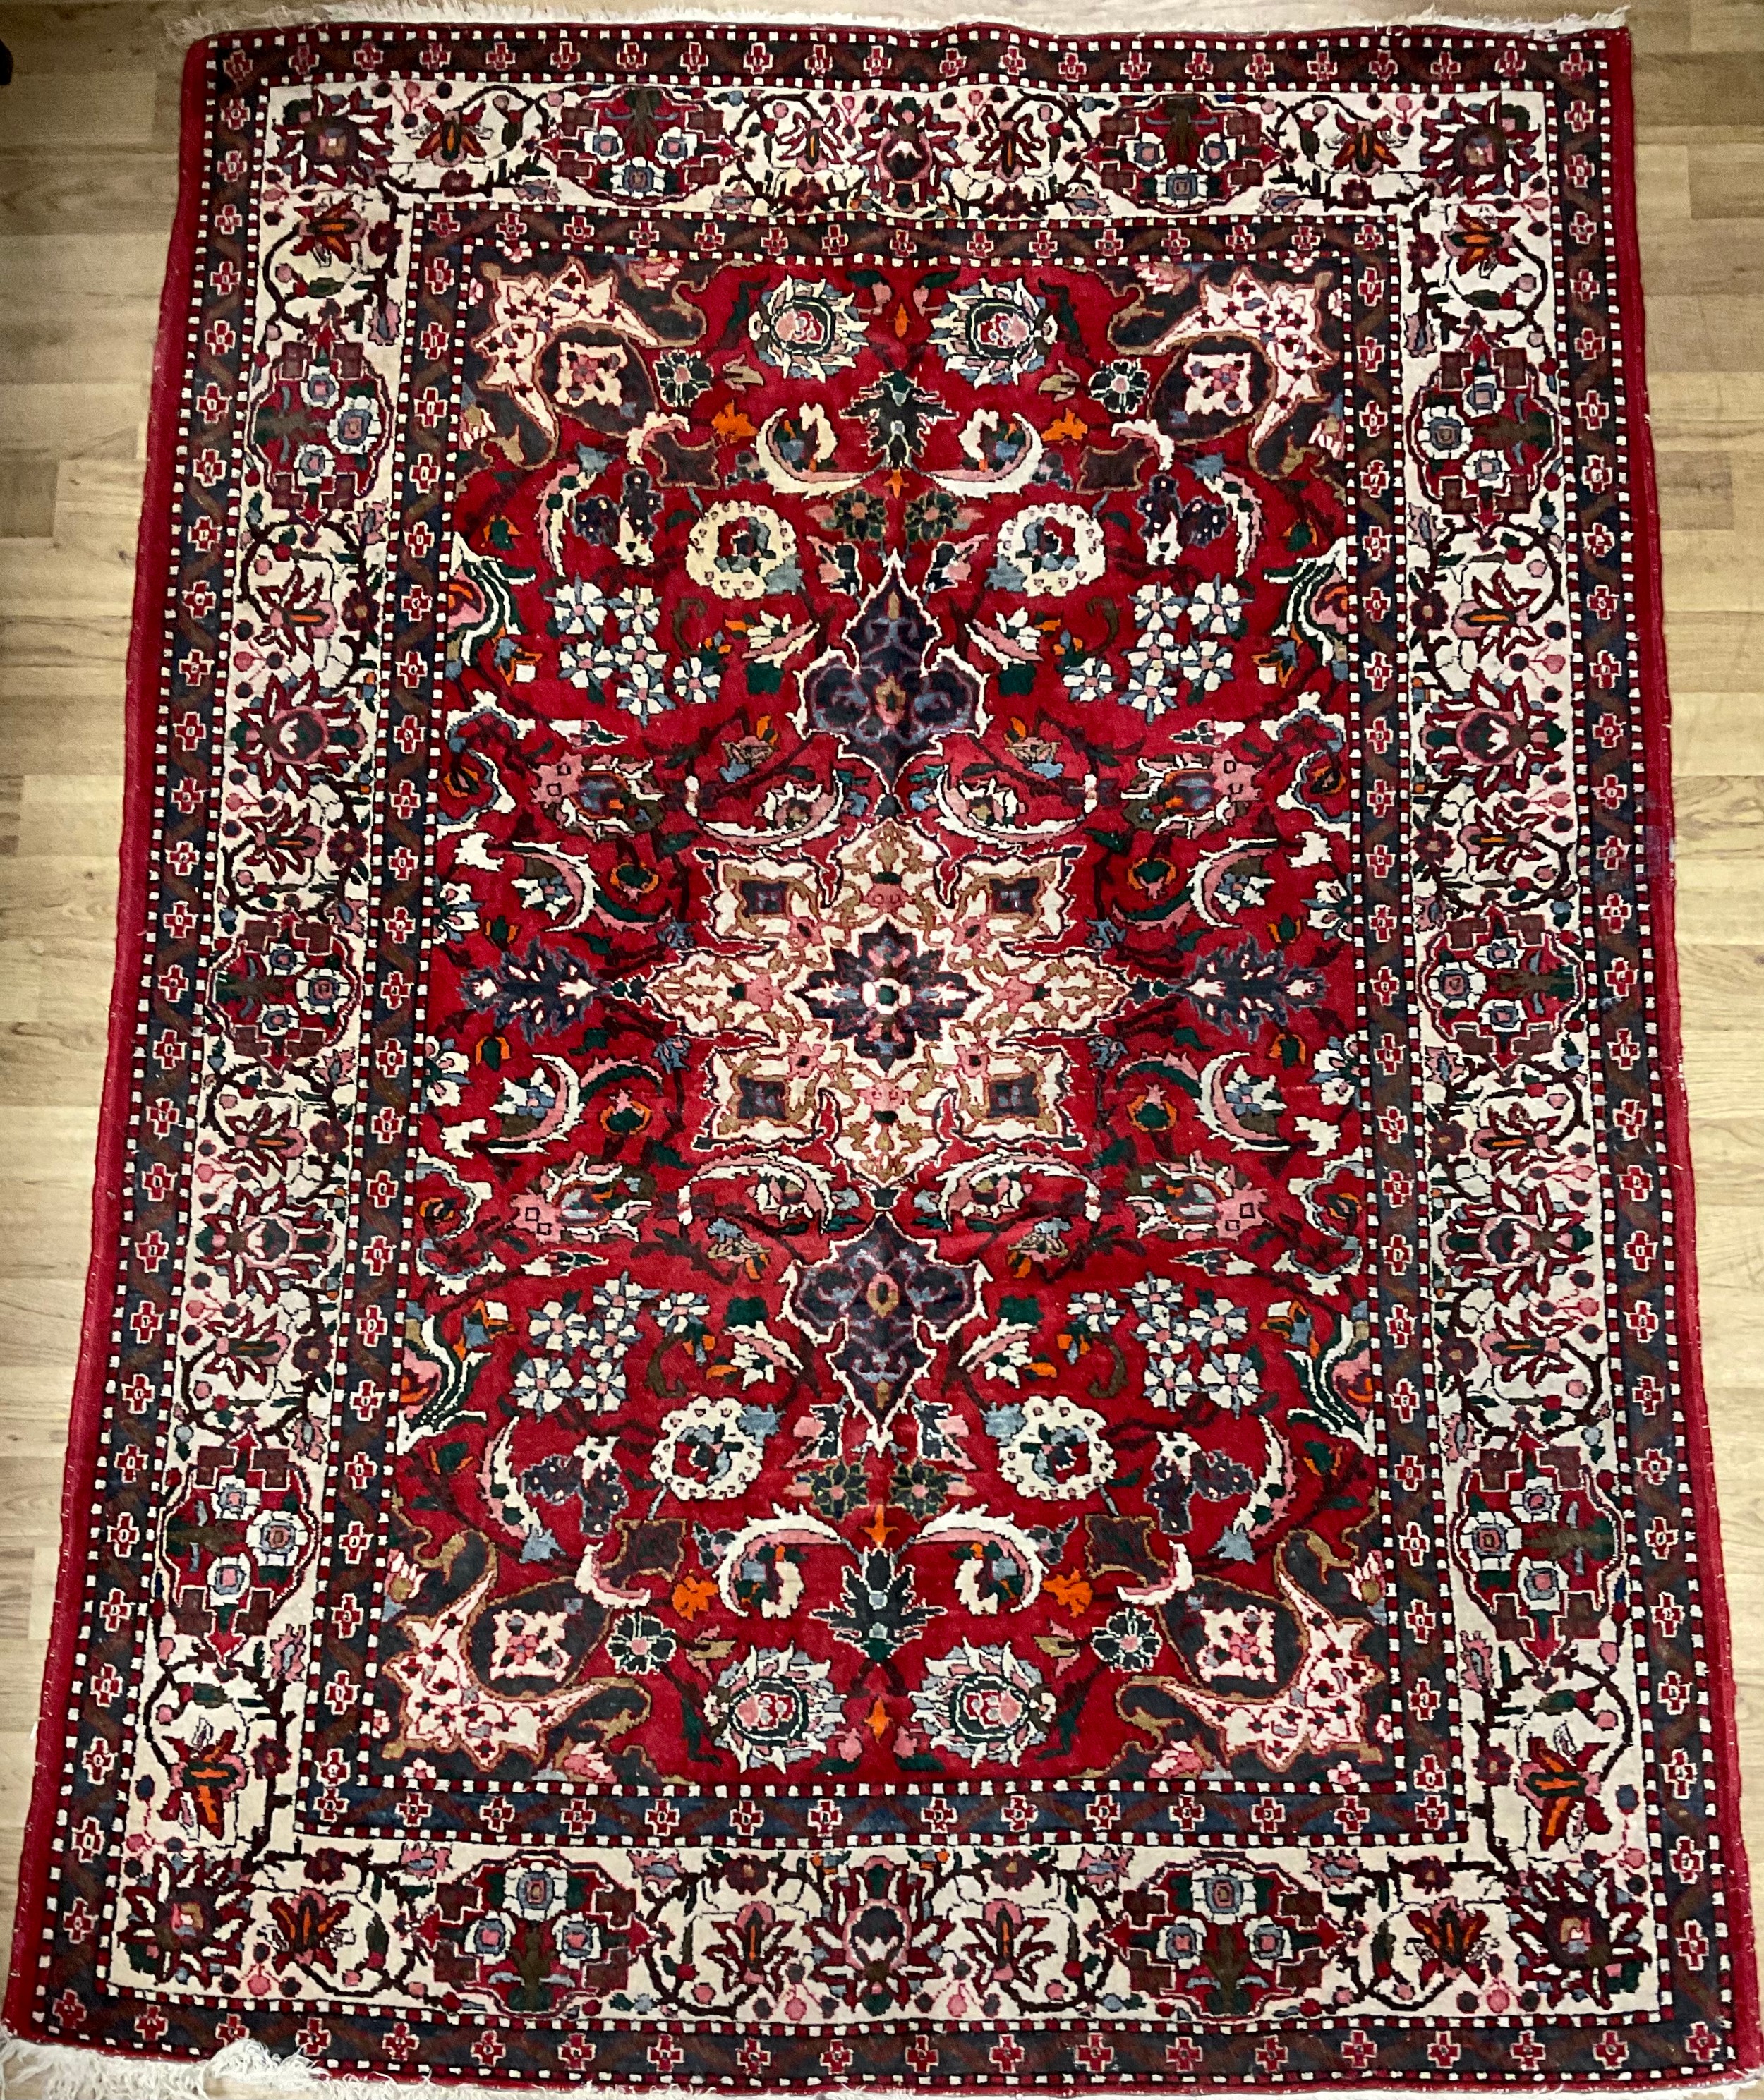 A fine hand made Persian Isfahan rug, 203cm x 149cm